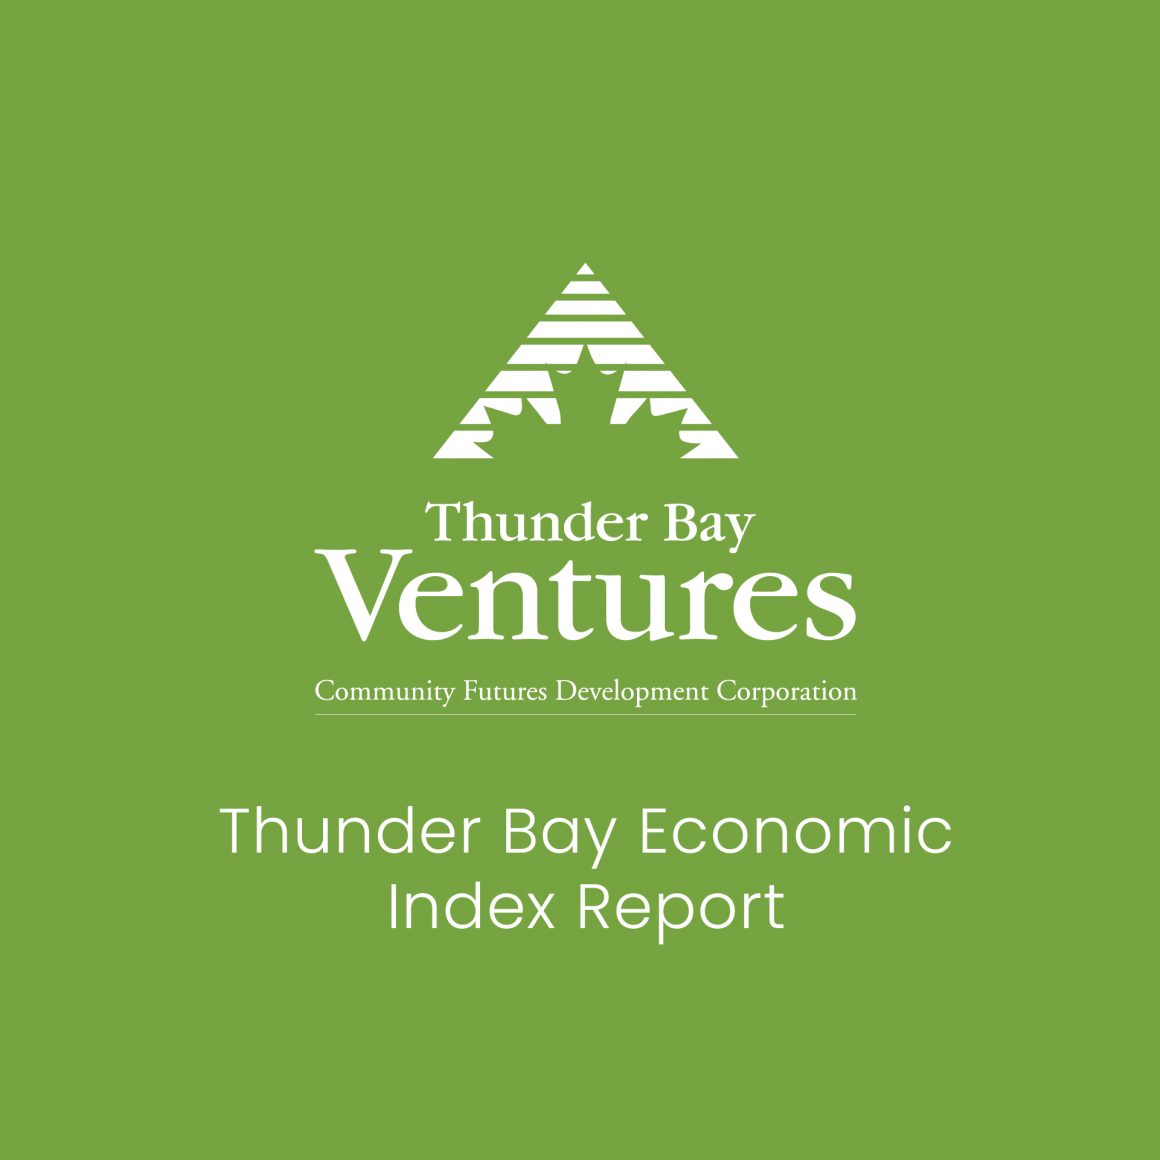 Thunder Bay Economic Index Report